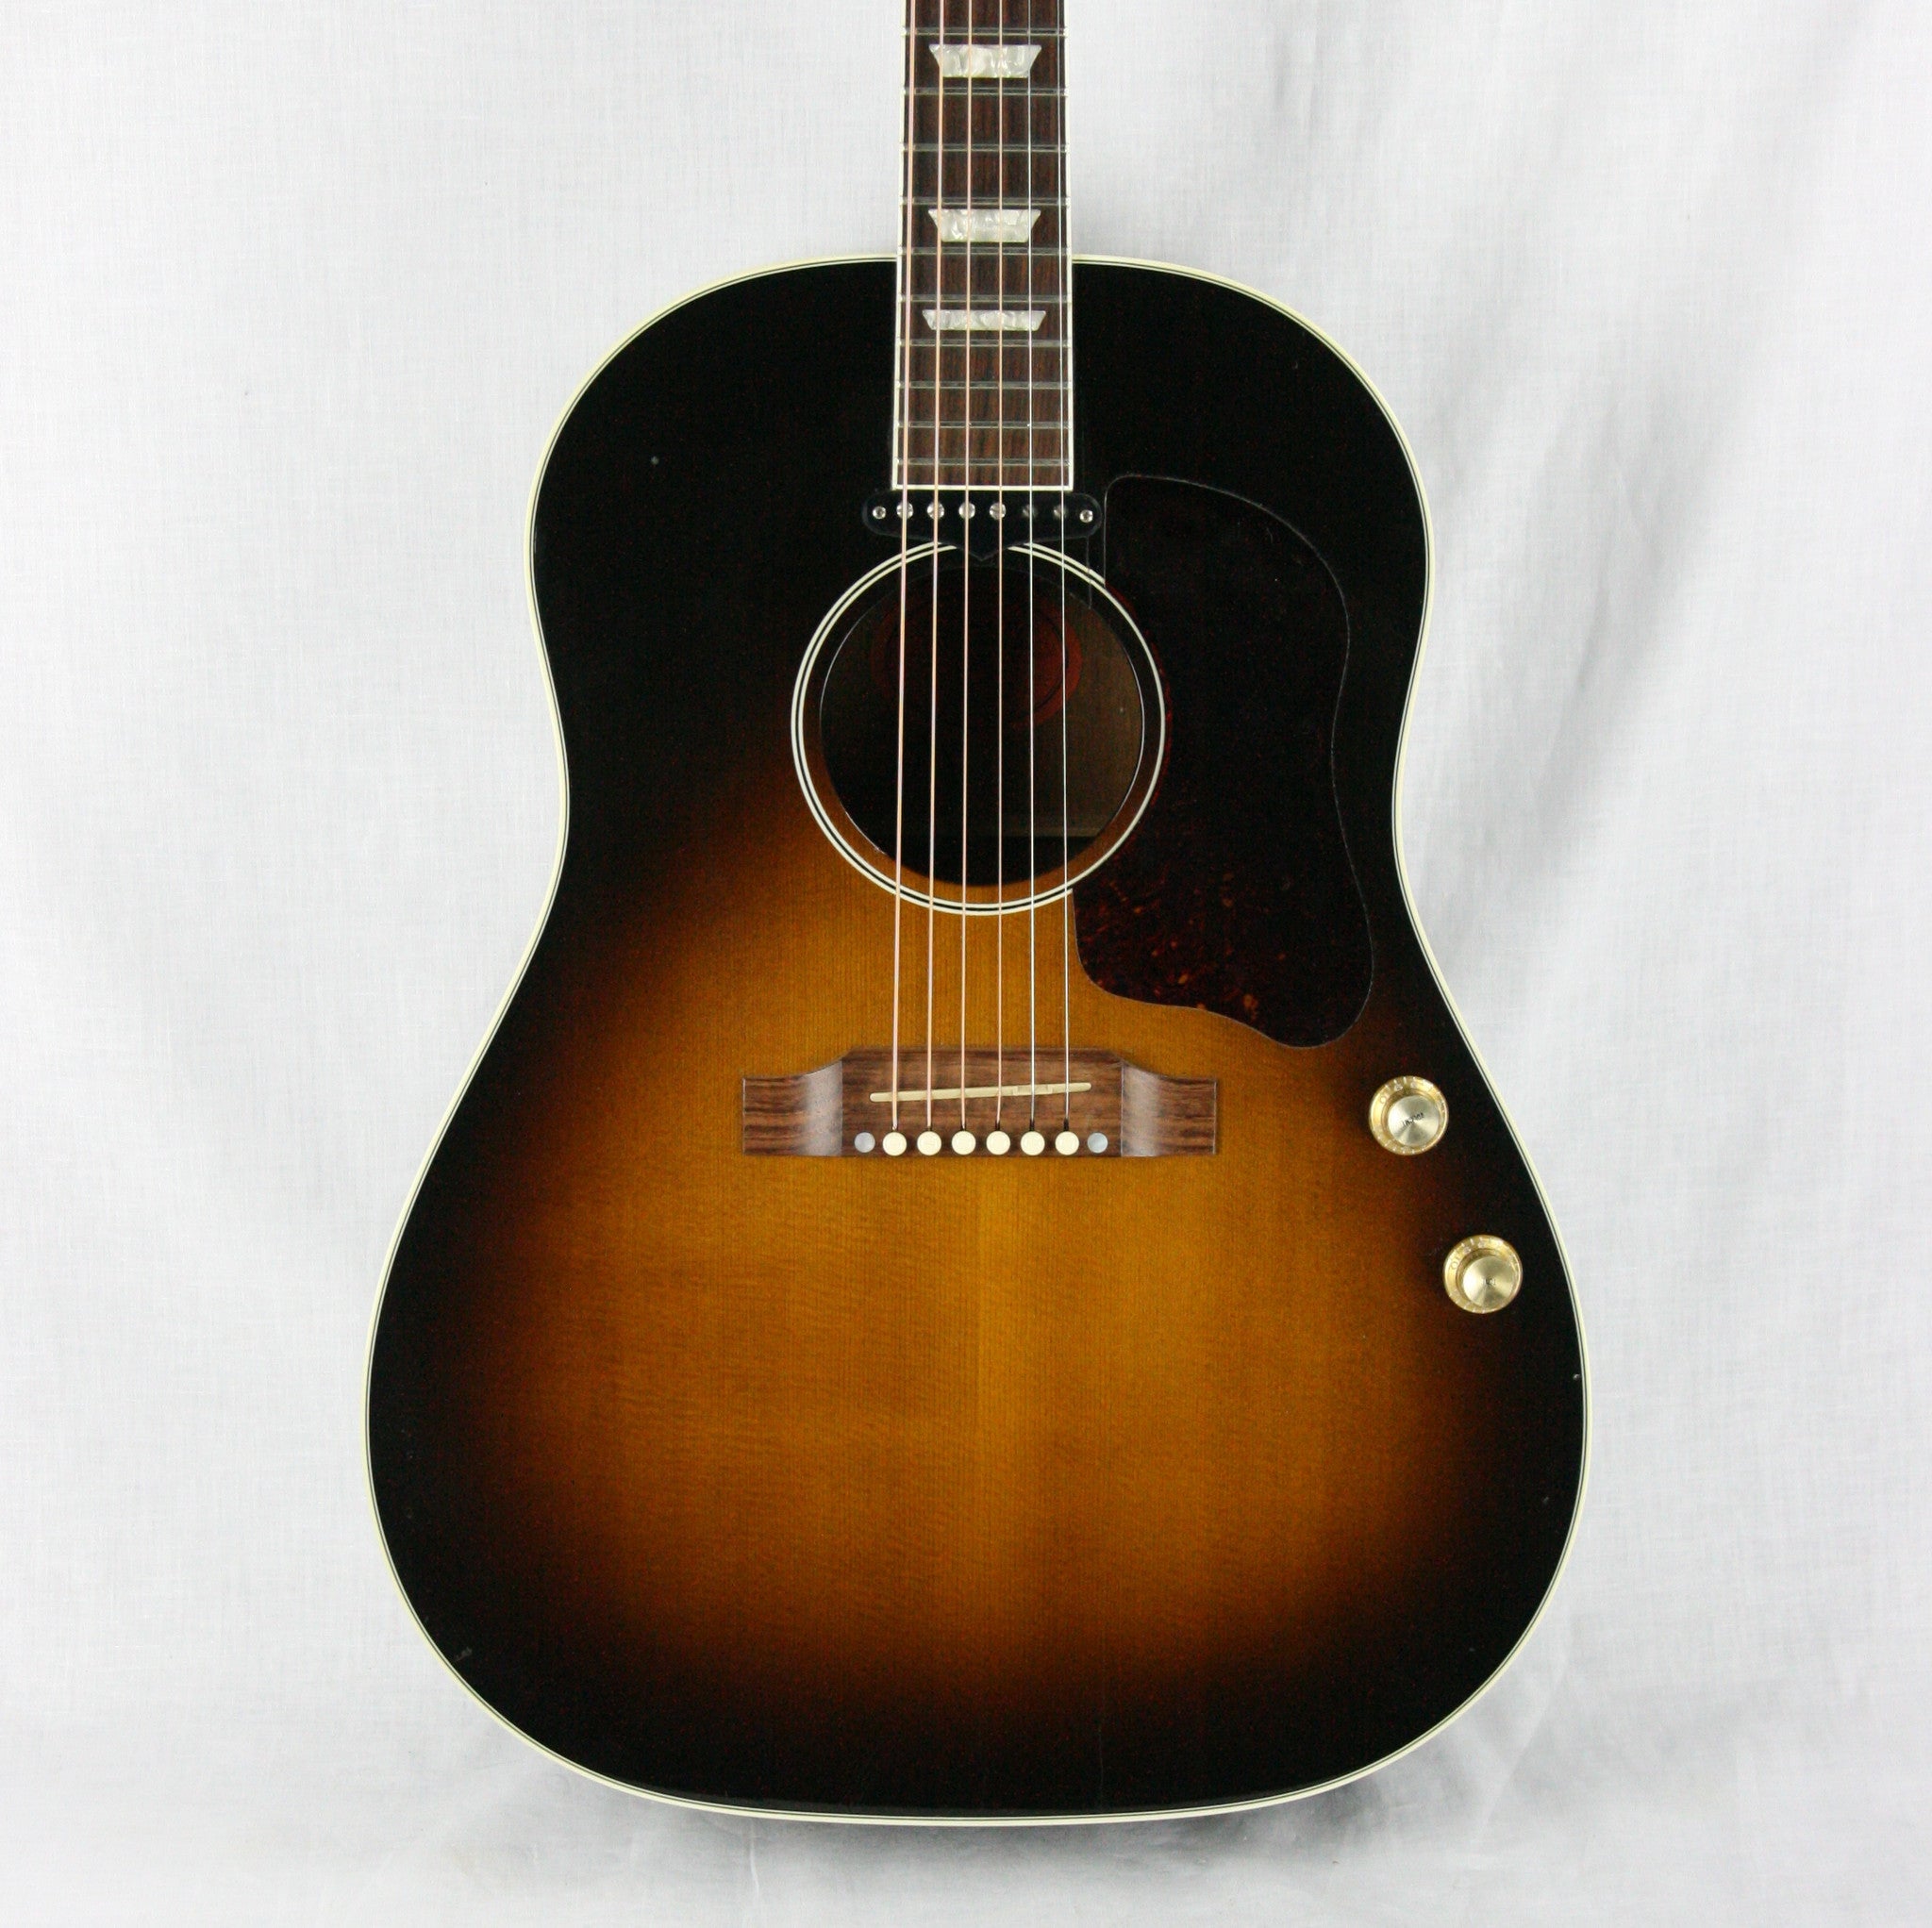 *SOLD*  1999 Gibson J-160E Acoustic Electric Guitar Sunburst w/ case! John Lennon Beatles, plays/sounds great!